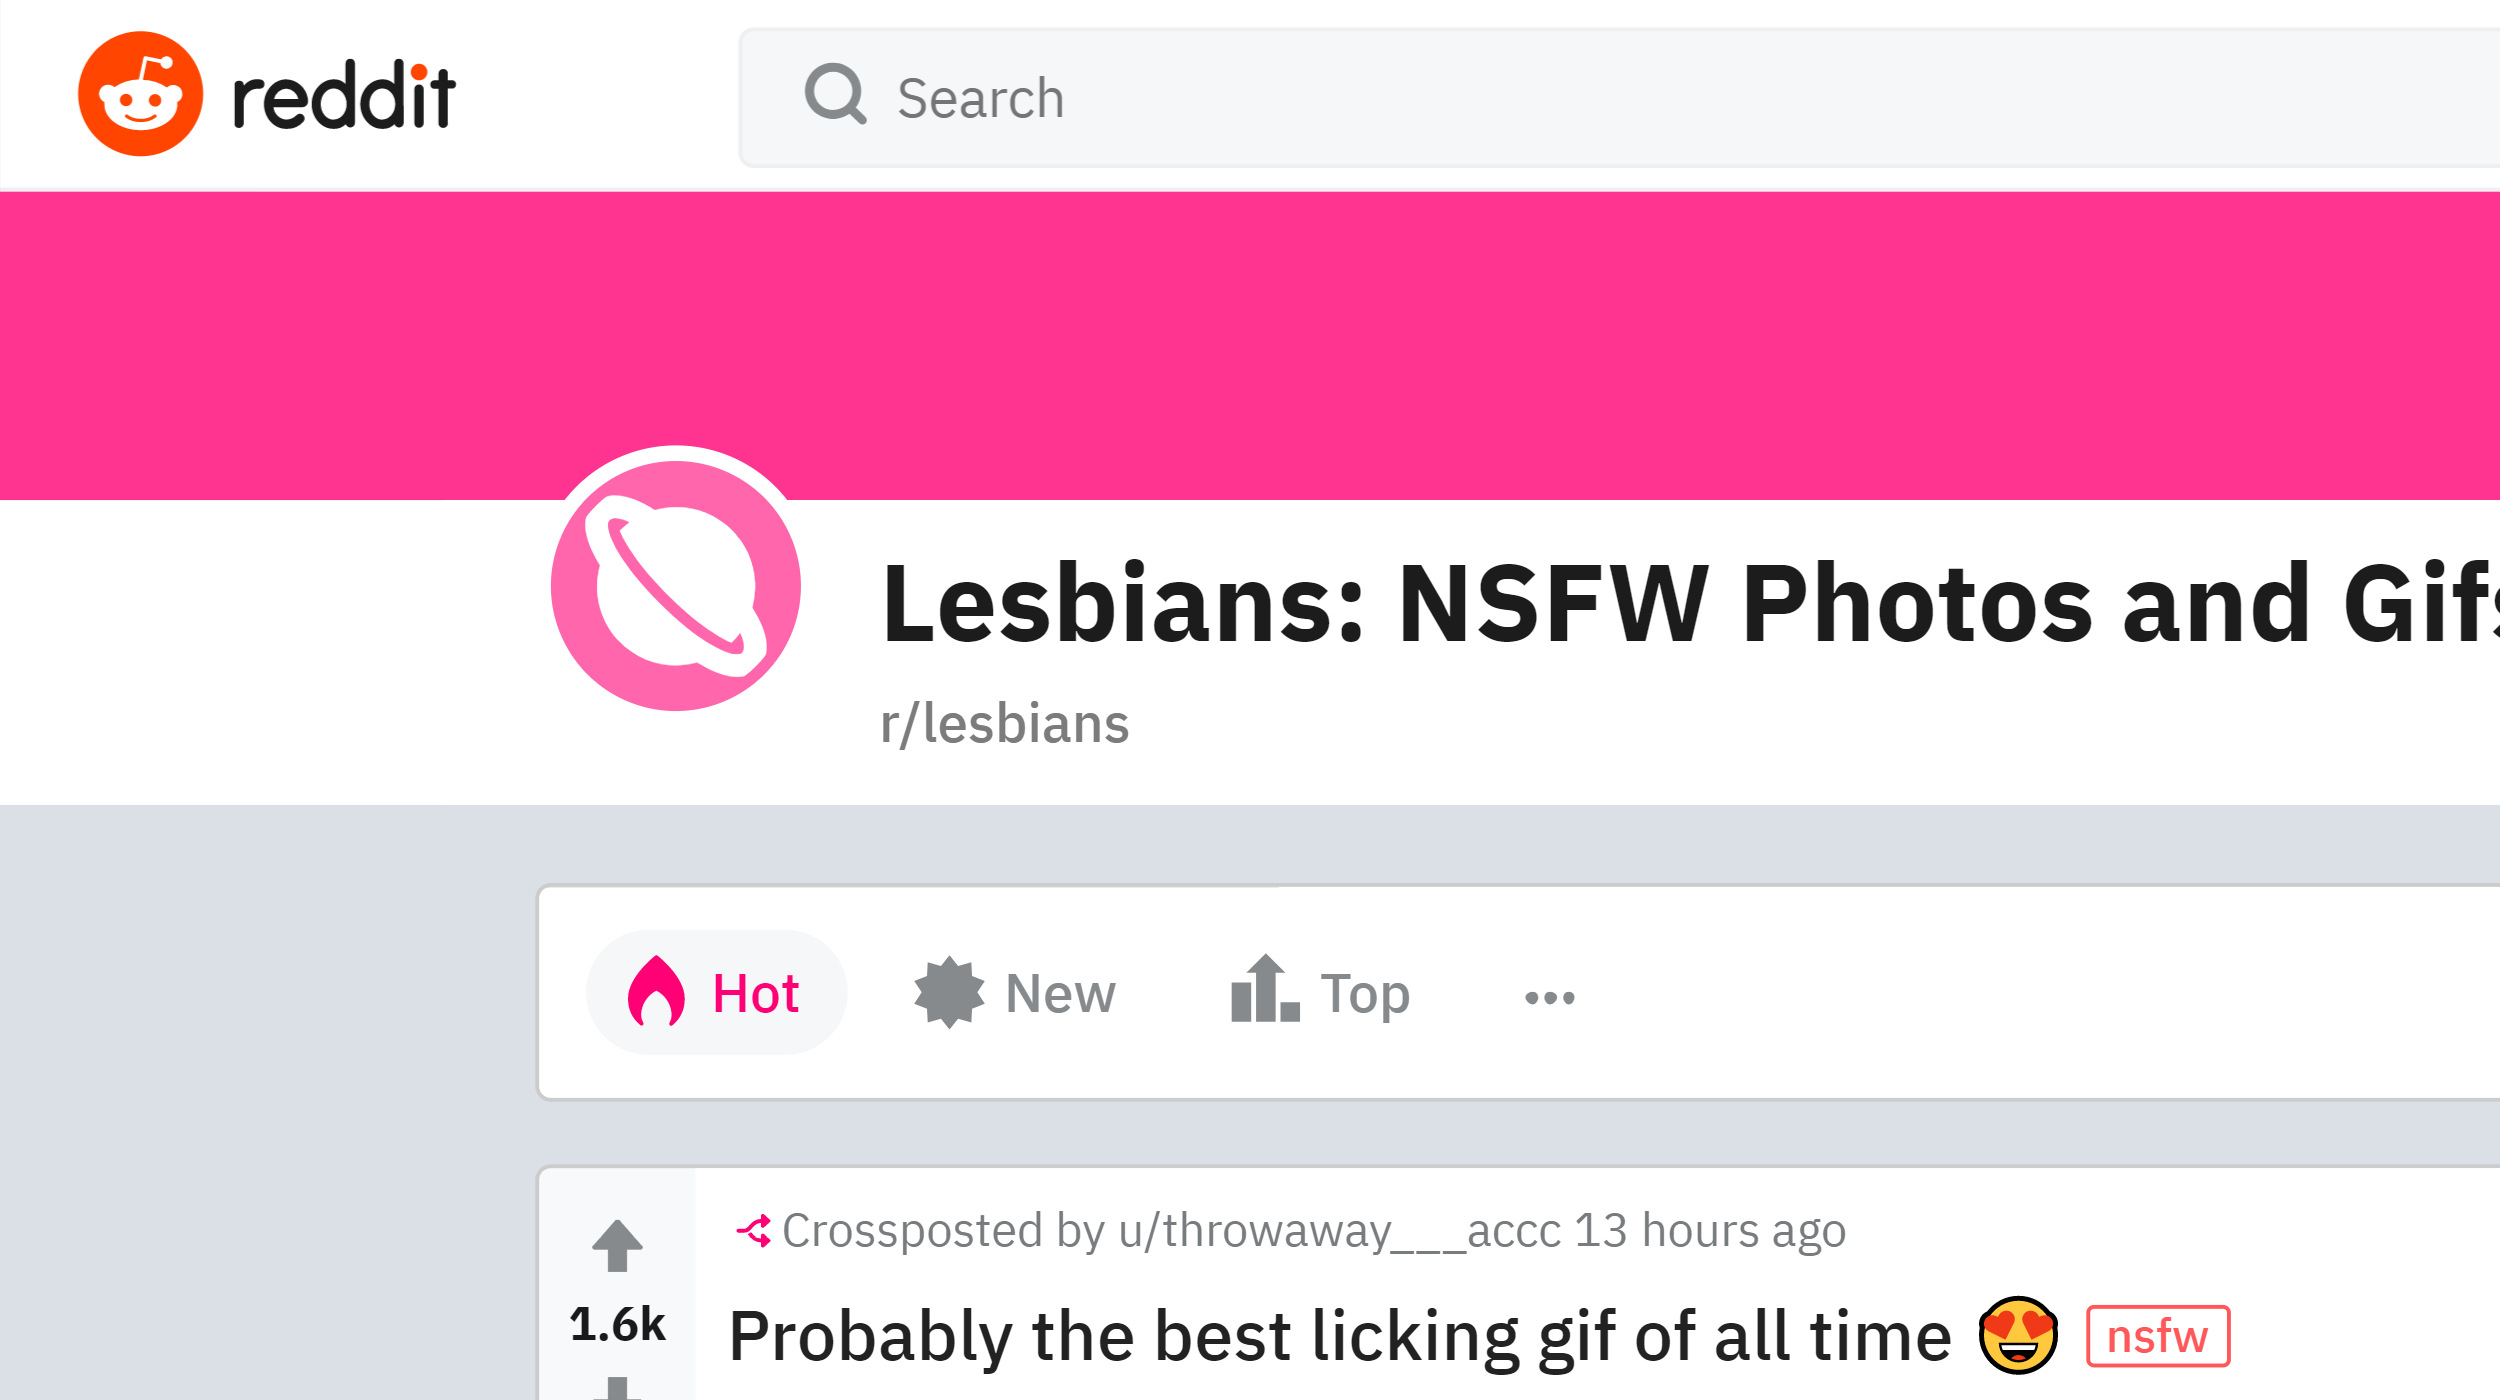 Reddit Lesbians